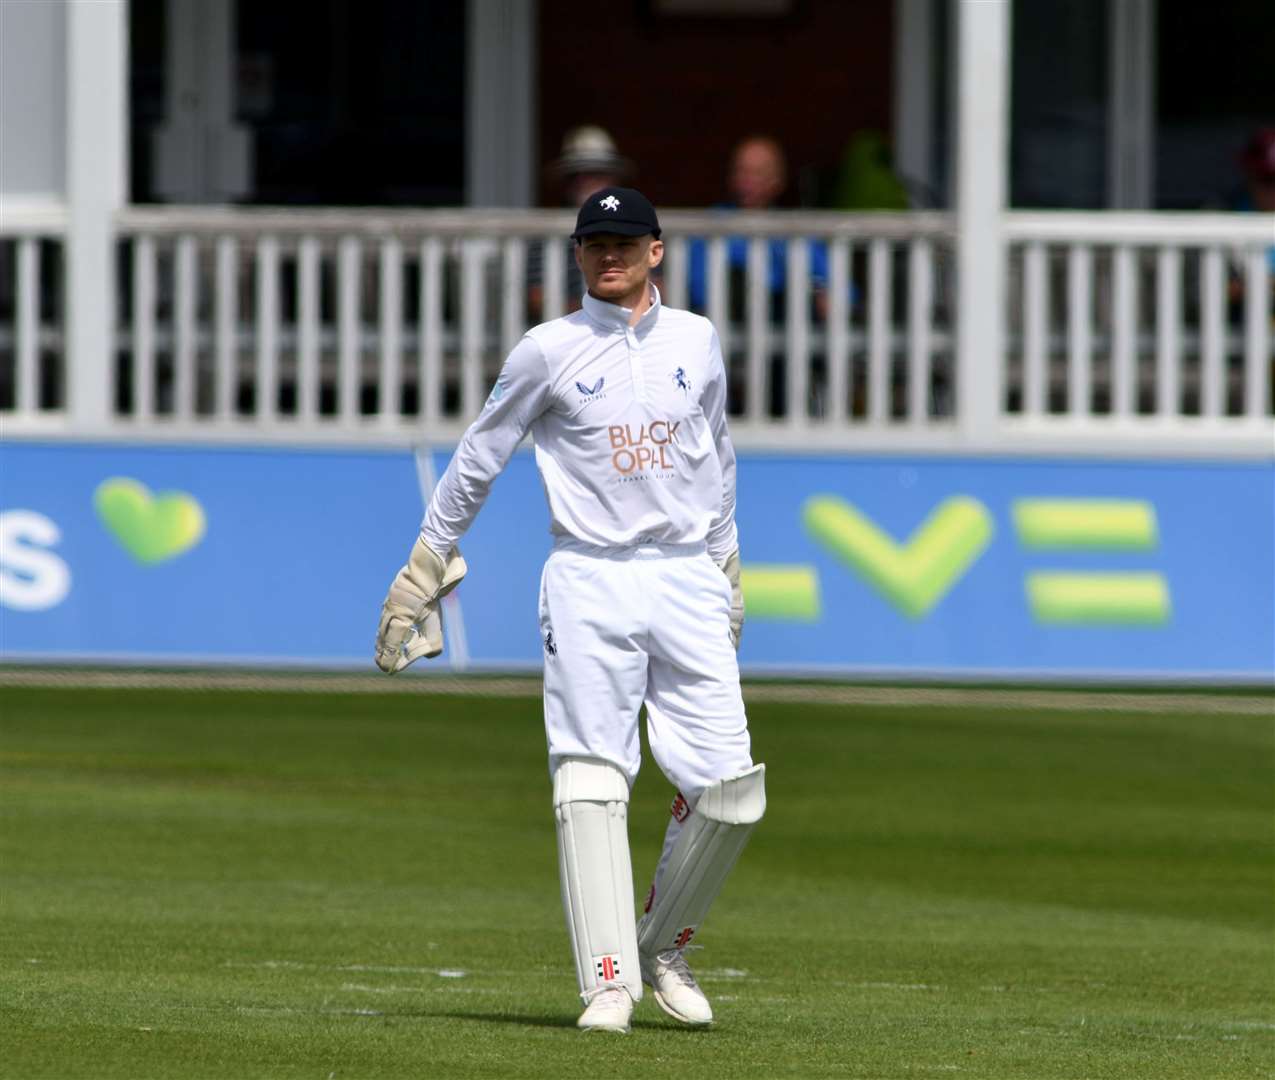 Kent cricketer Sam Billings has revealed his skin cancer ordeal